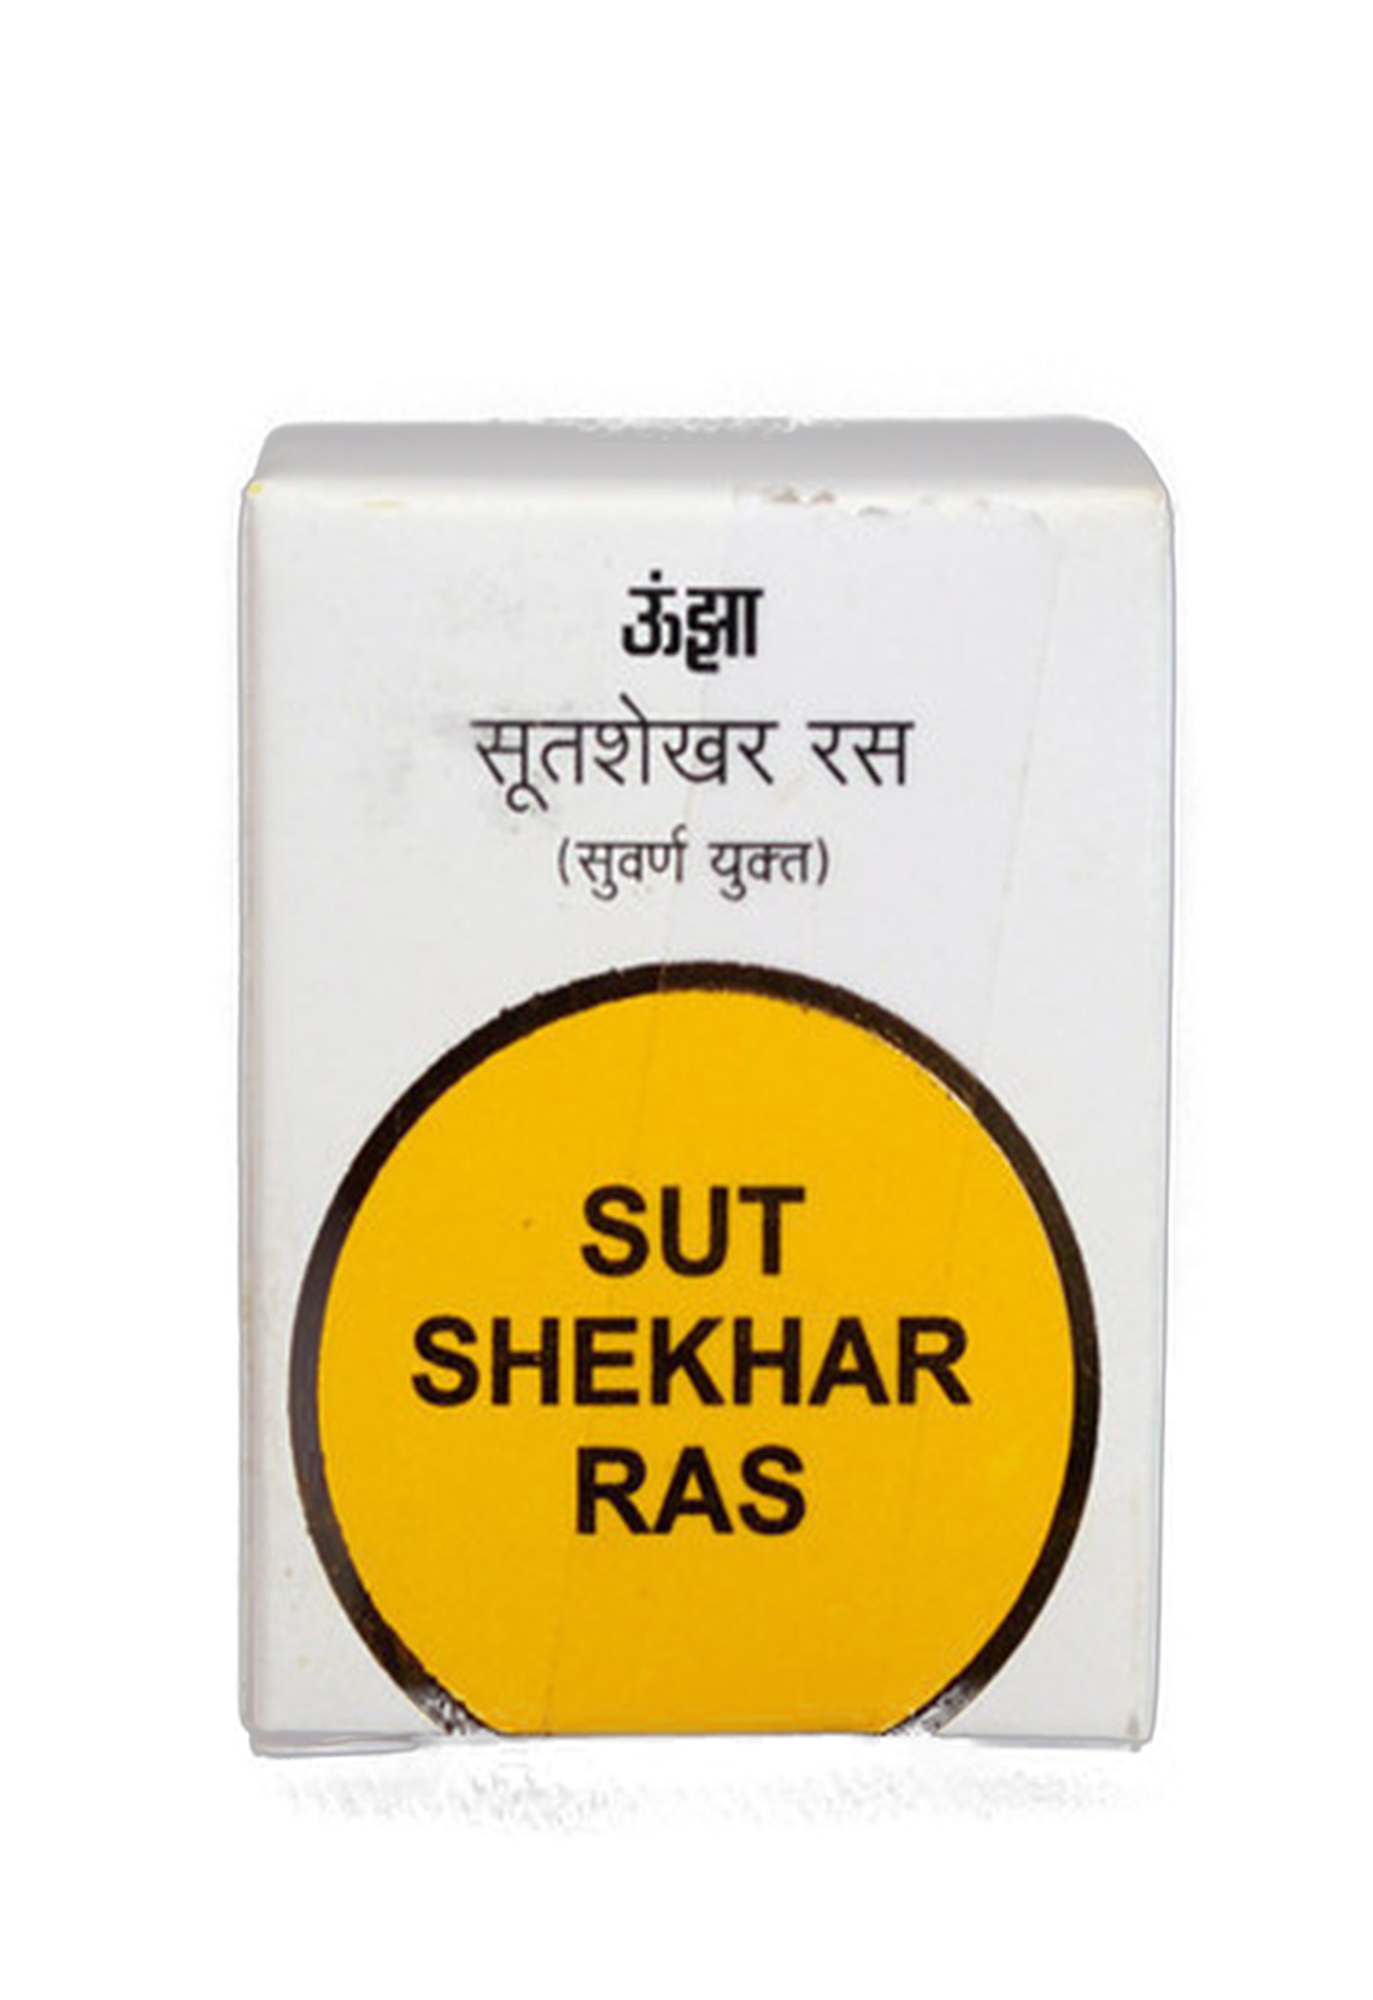 Buy Unjha Sut Shekhar Rasa Swarn Yukt at Best Price Online